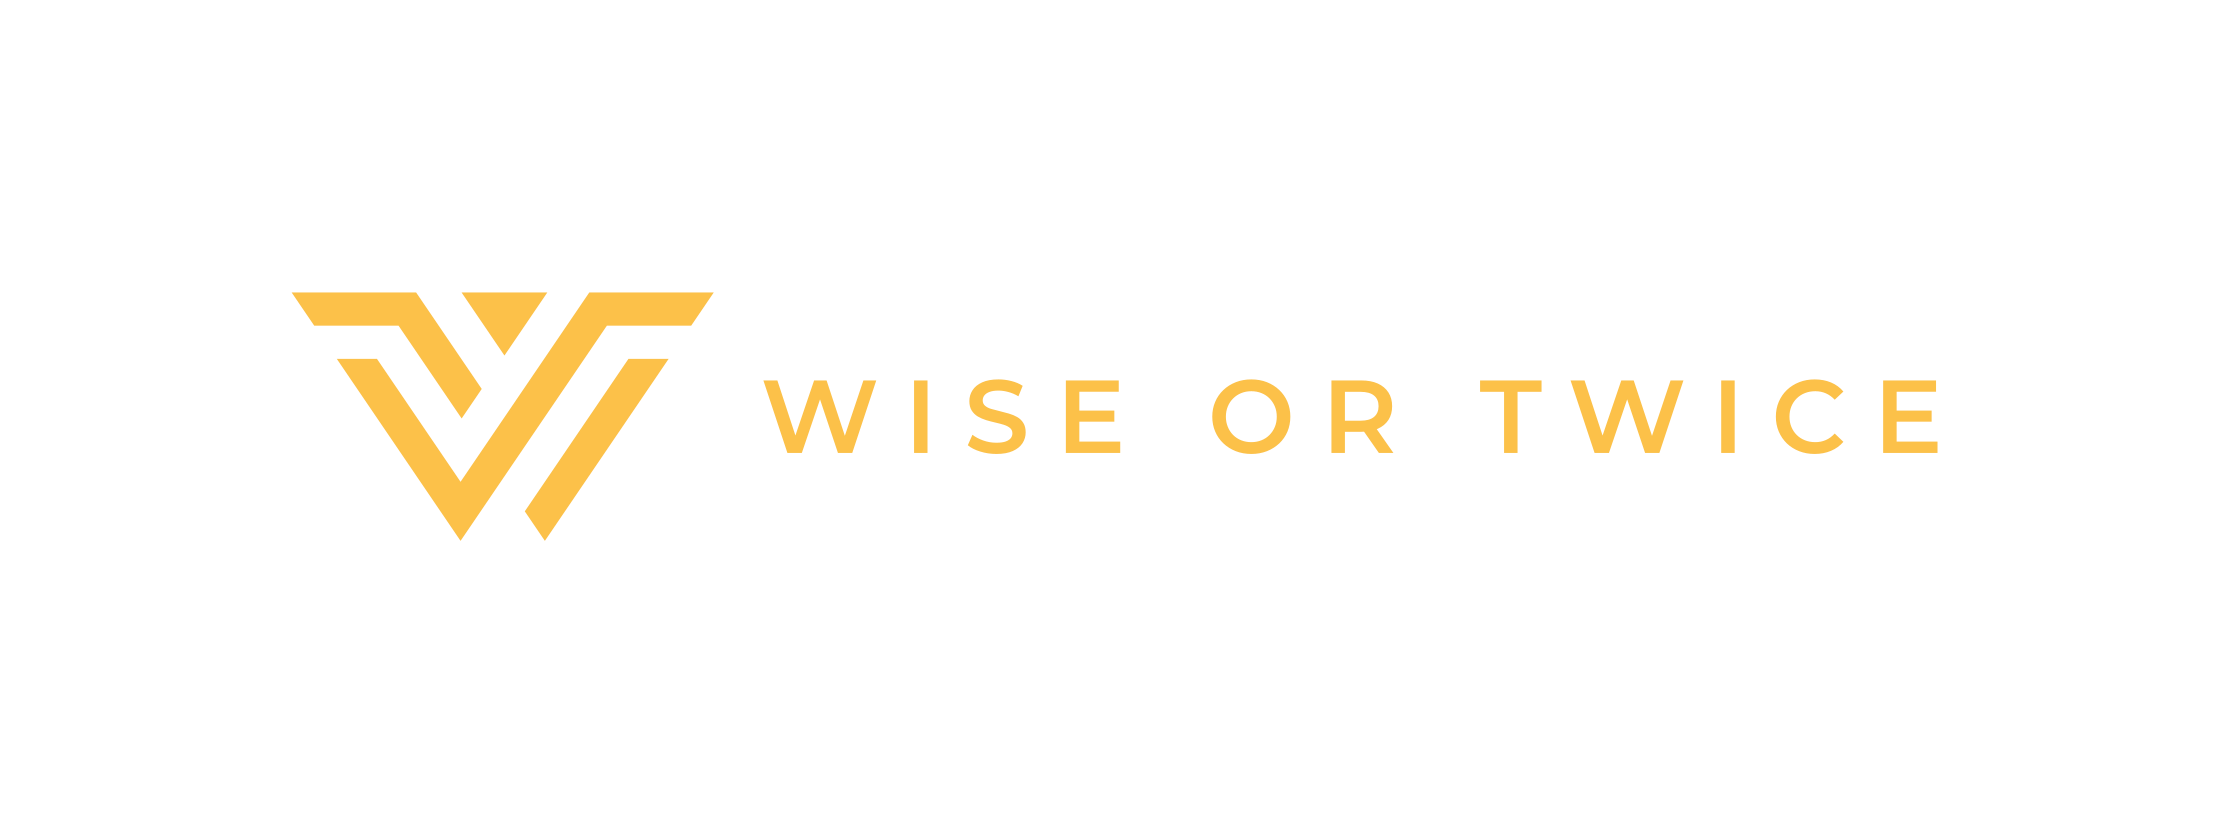 Omtale og erfaring med Wise or Twice